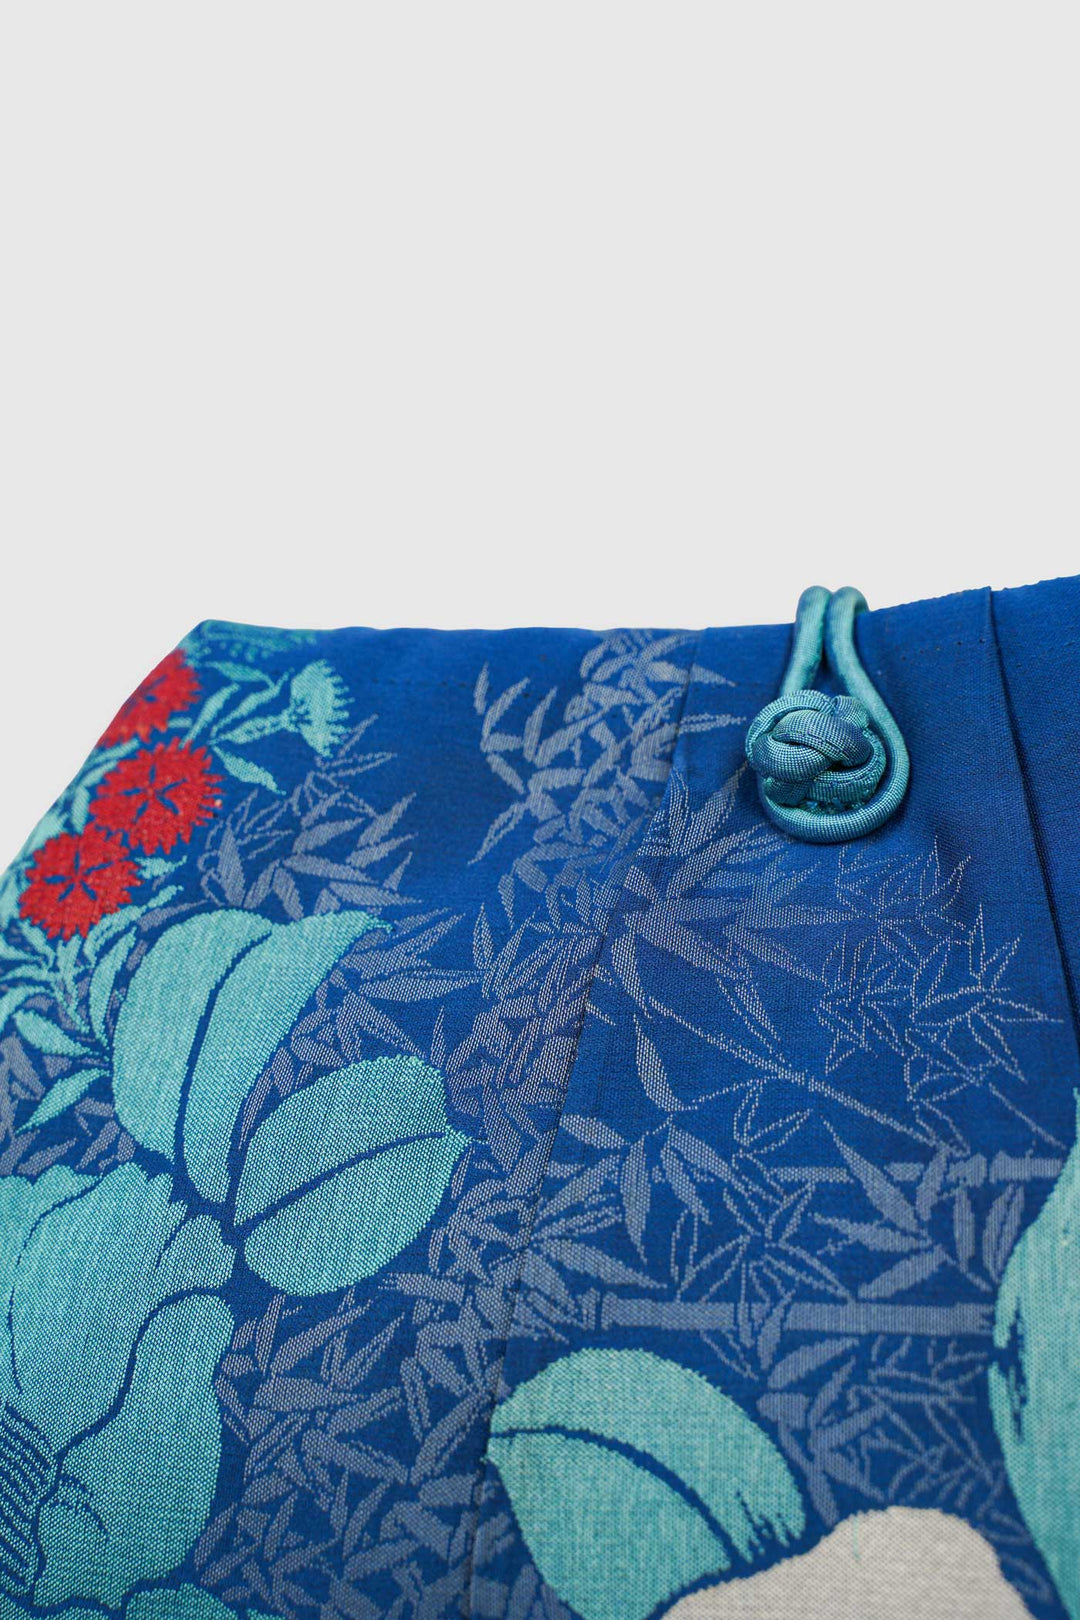 Japanese Silk Flower Brocade for a Contemporary Clutch Bag